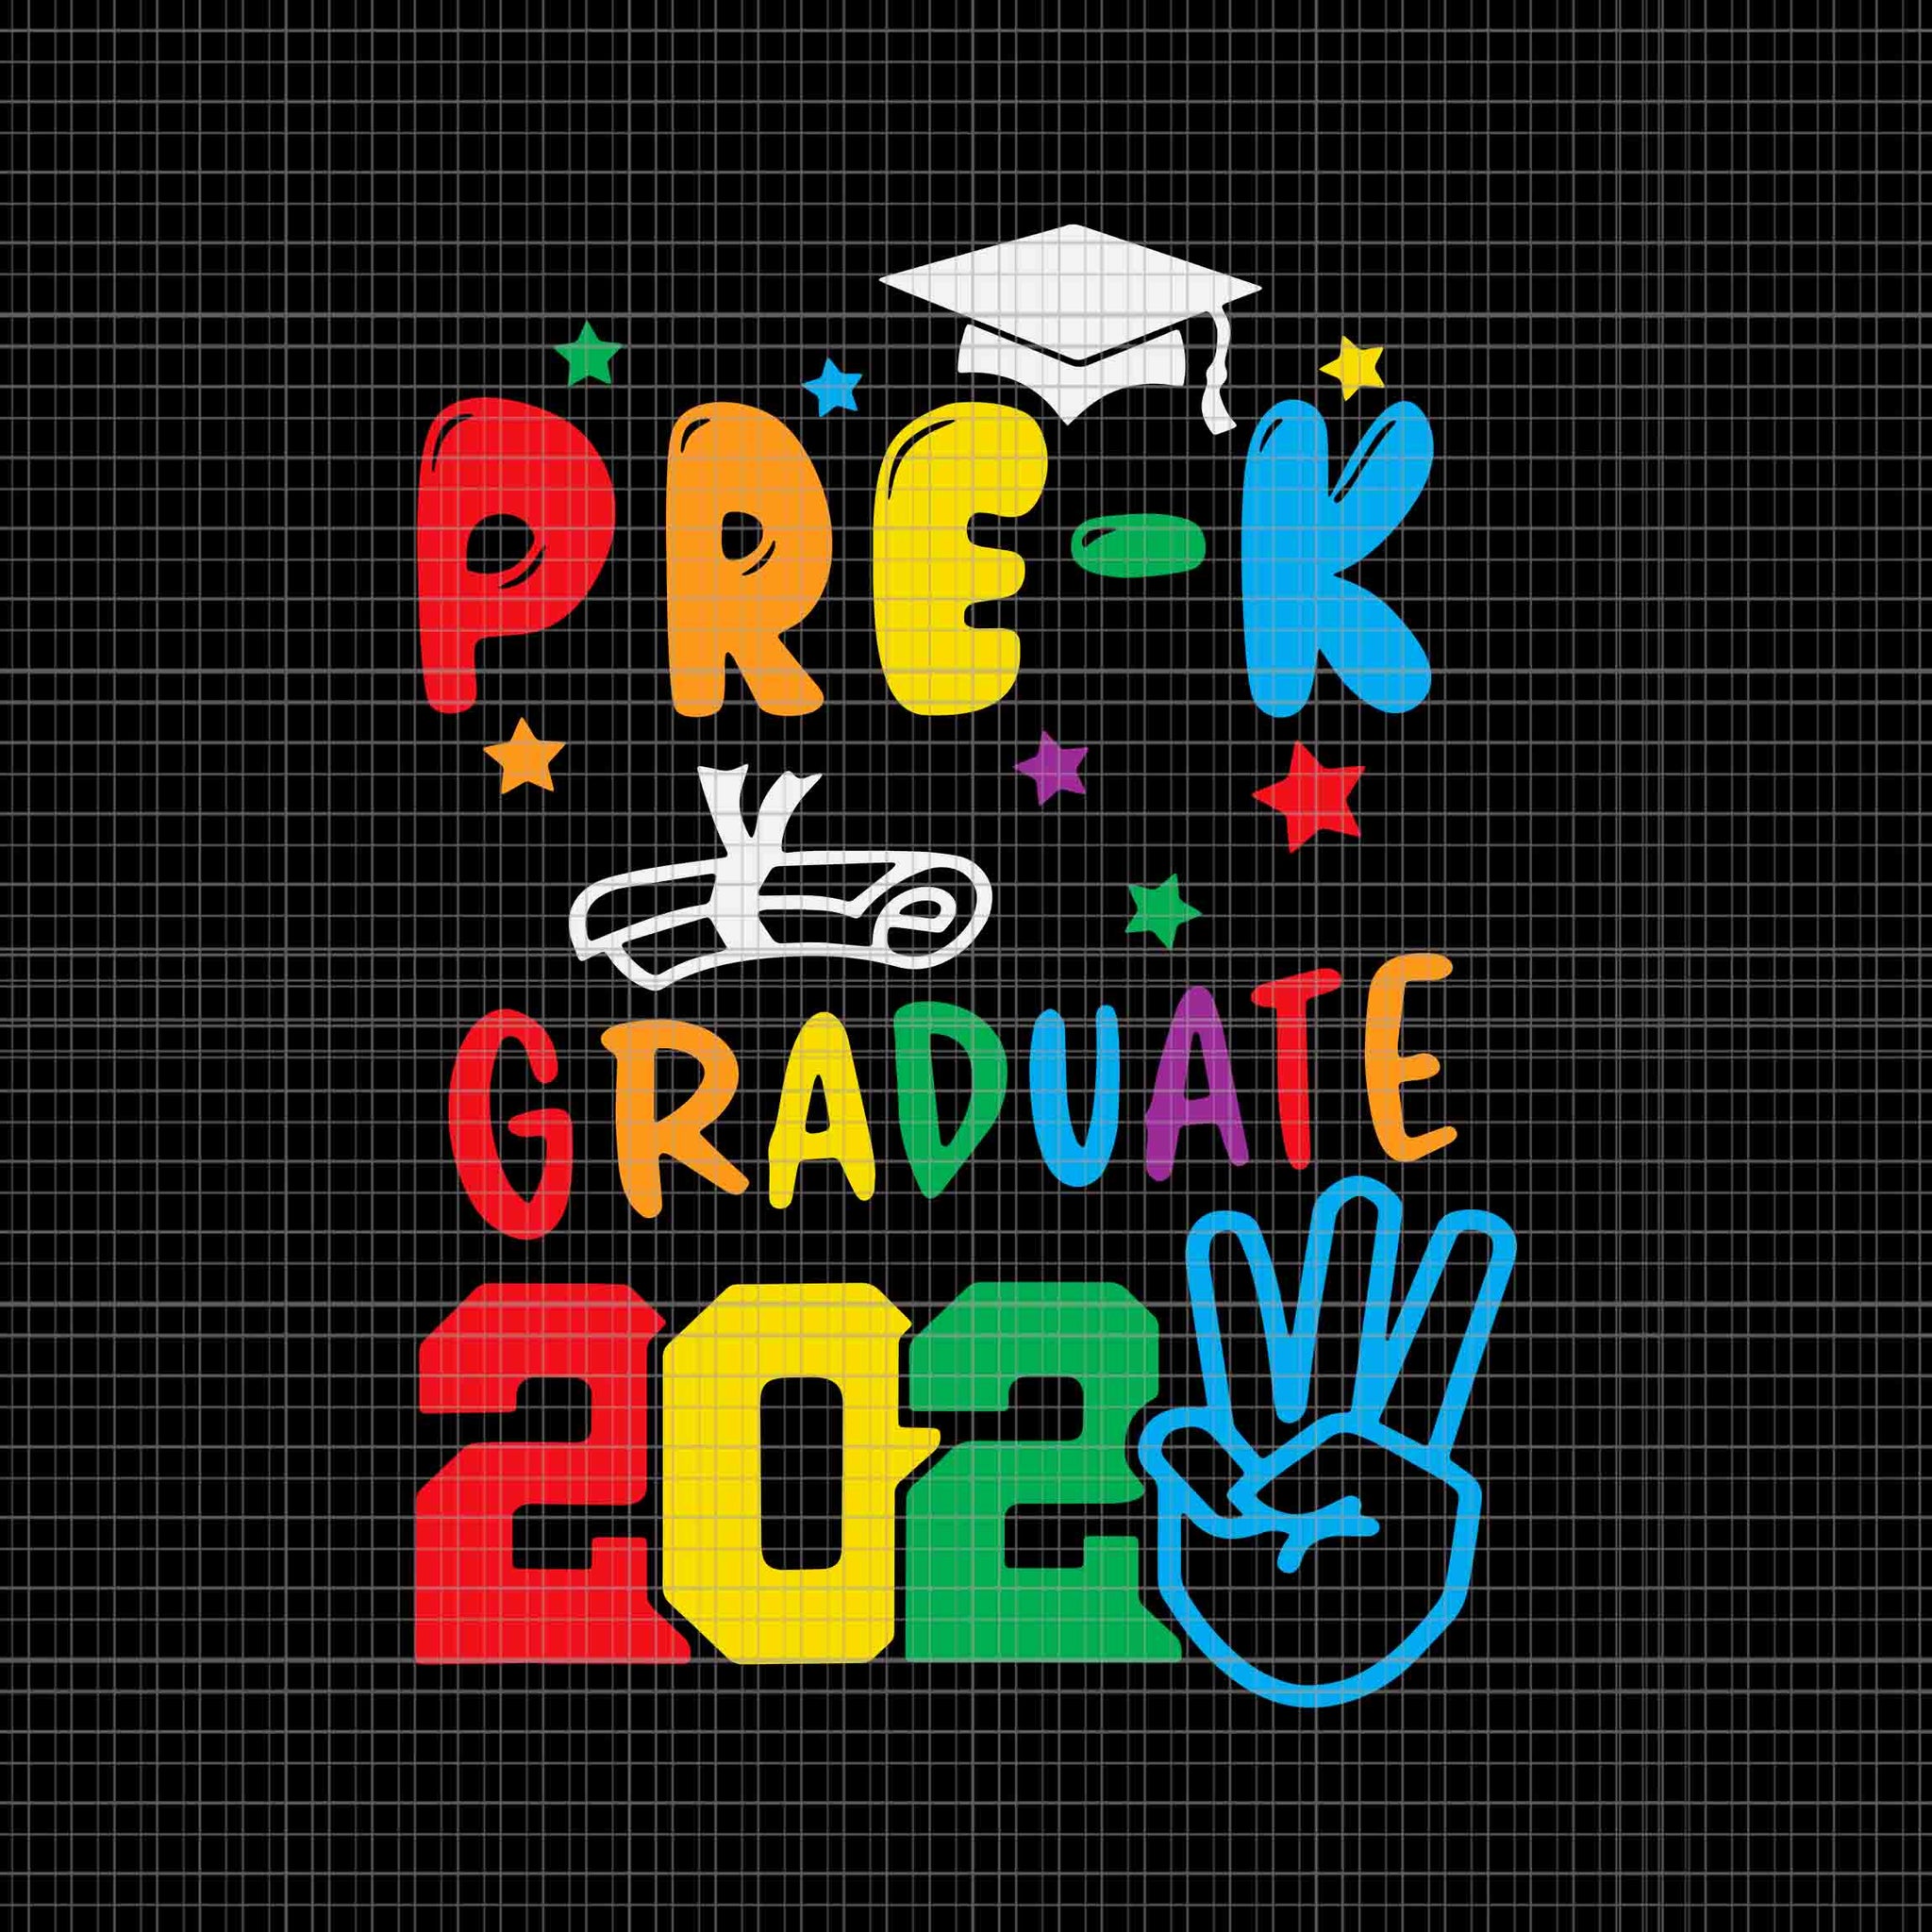 Pre-K Graduate 2023 Last Day Of School Graduation Svg, Pre-K Graduate 2023 Svg, Last Day Of School Svg, School Svg